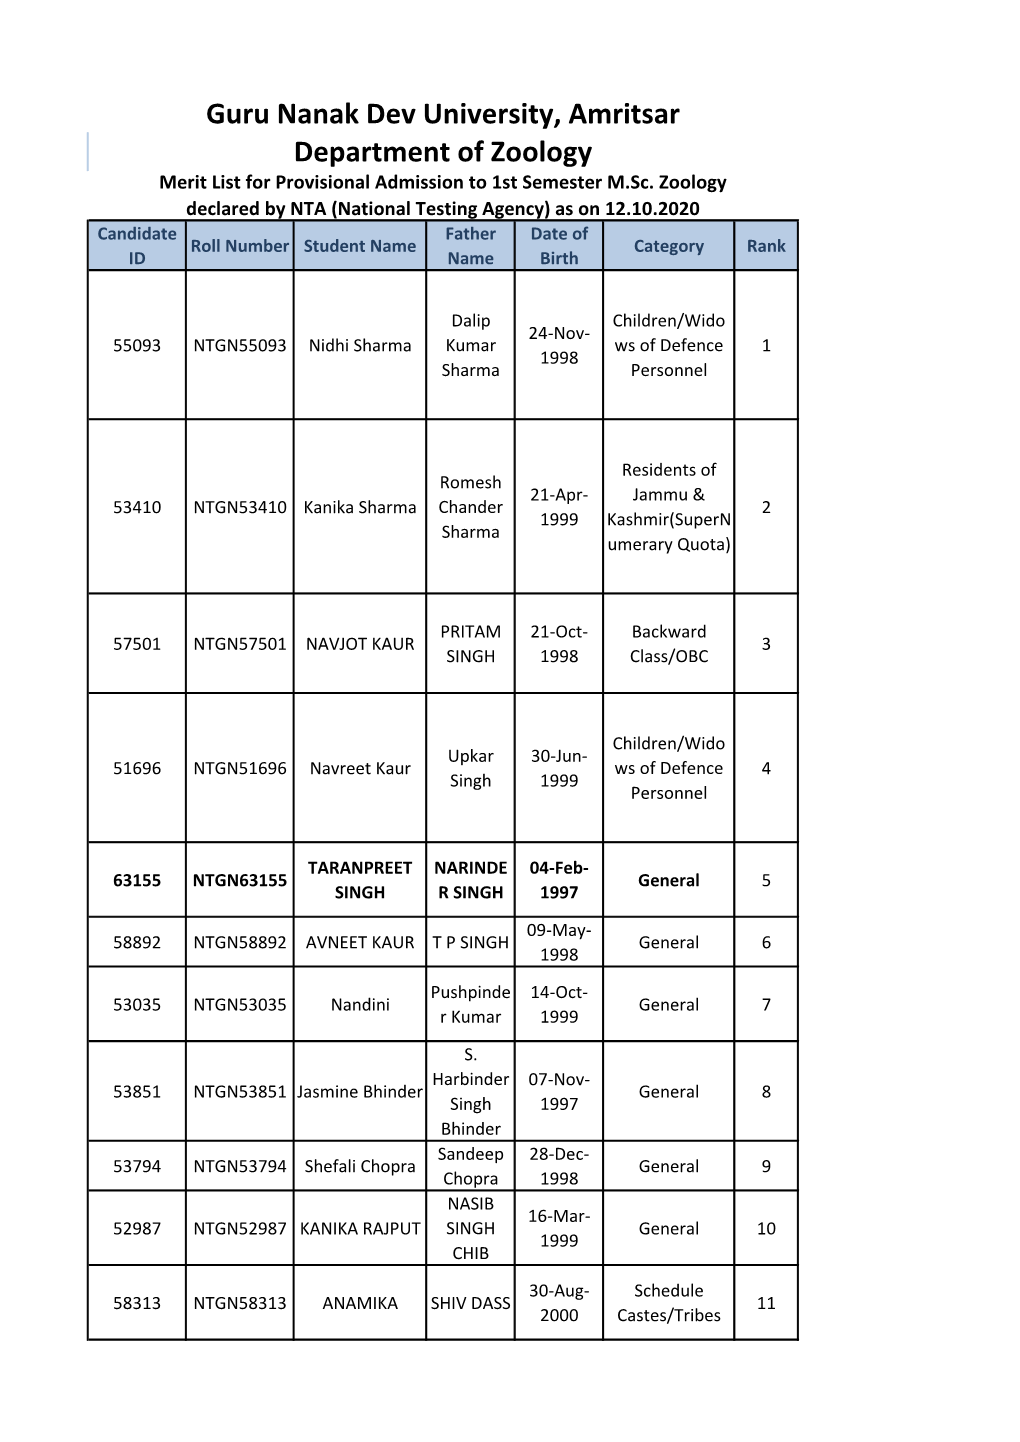 Guru Nanak Dev University, Amritsar Department of Zoology Merit List for Provisional Admission to 1St Semester M.Sc